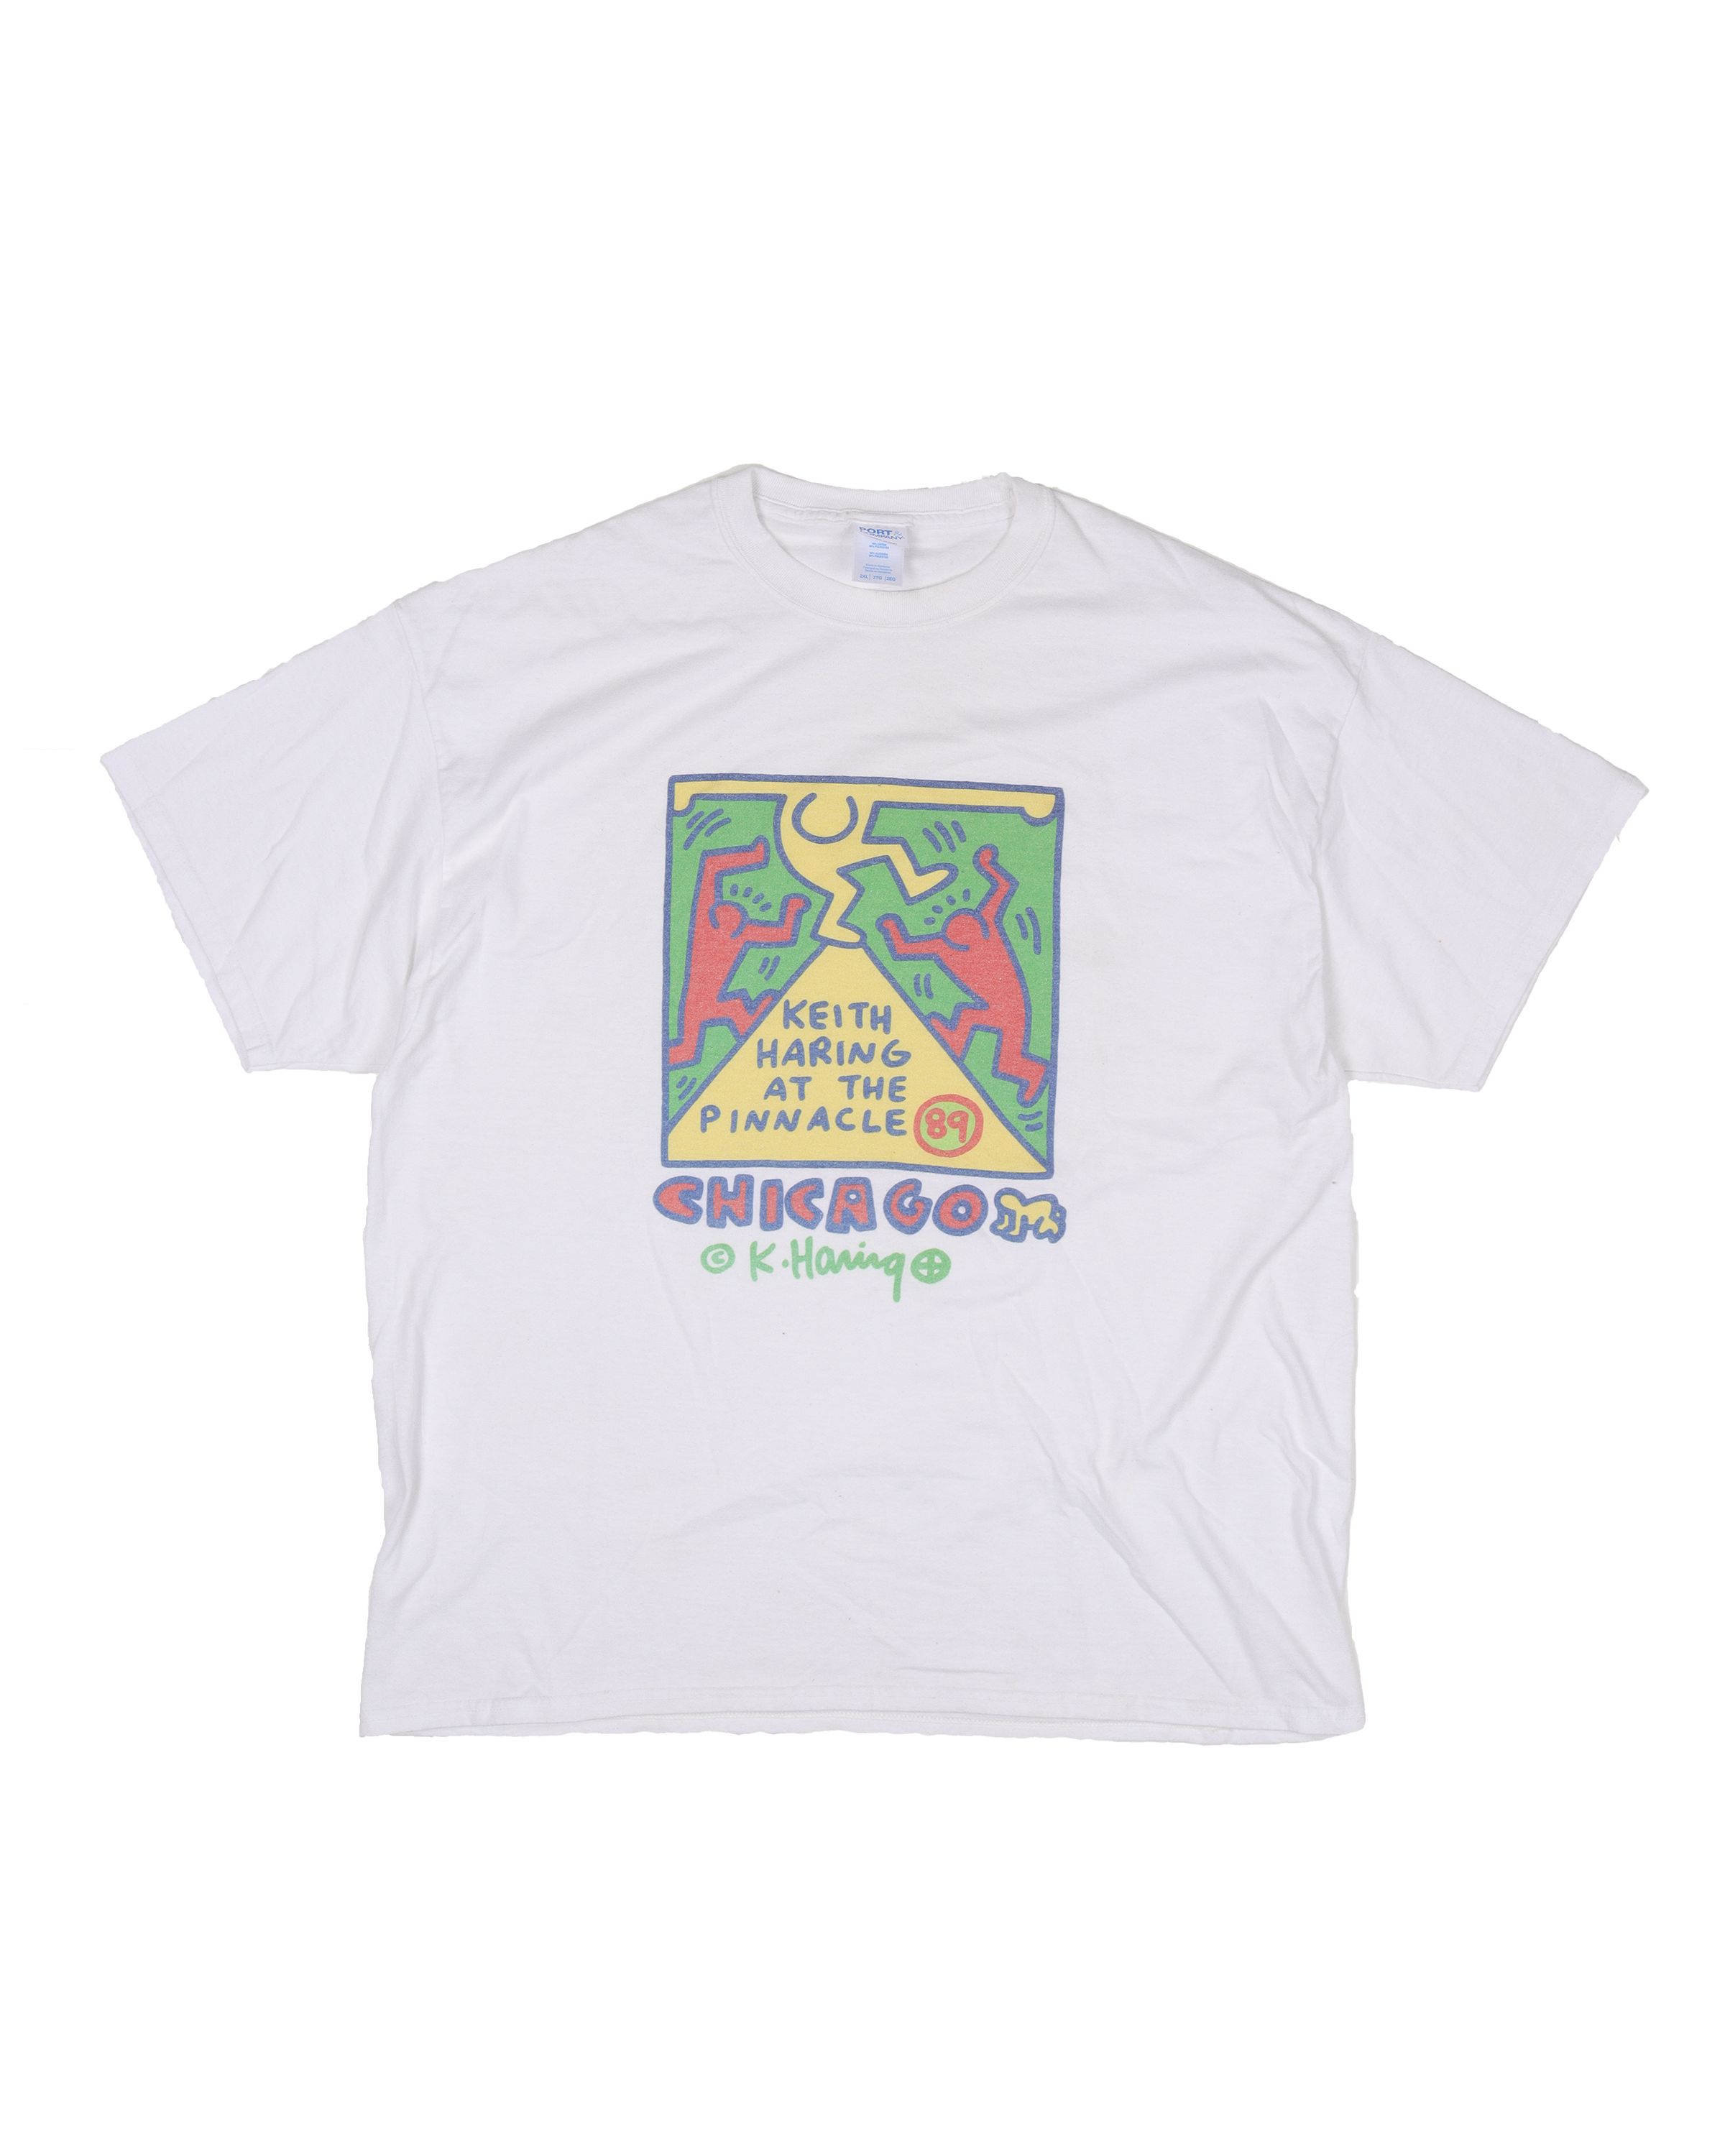 Keith Haring 1989 Tour T-Shirt